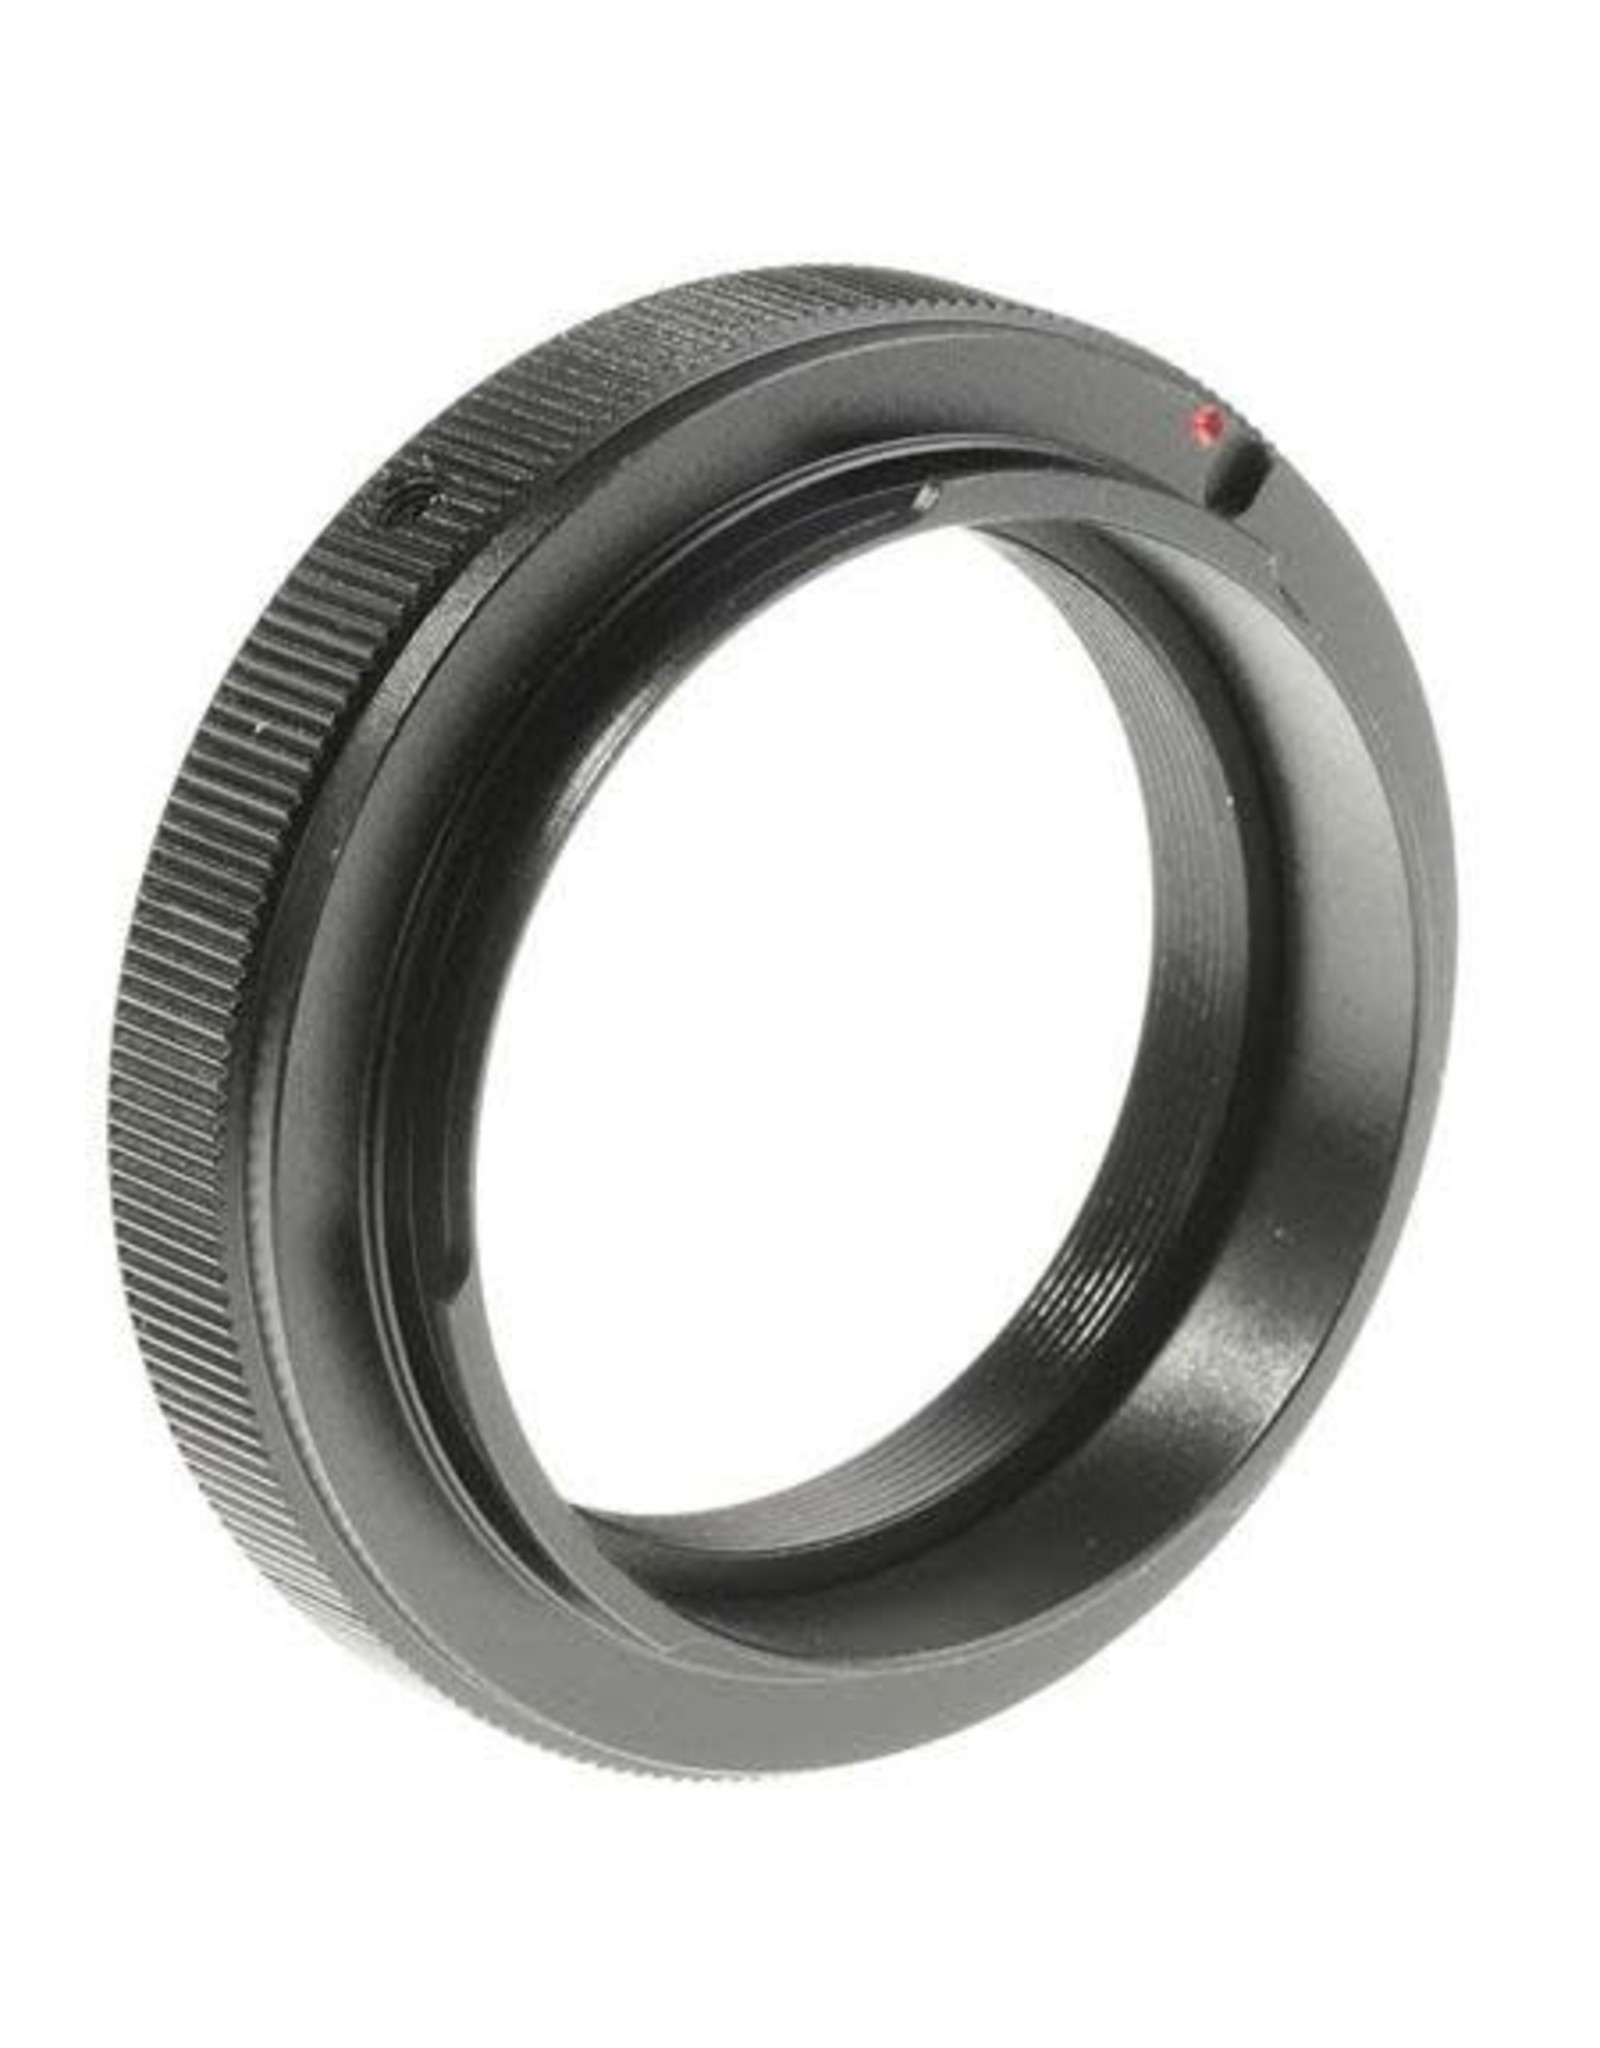 T Mount Adapter Ring Olympus/Panasonic 4/3 Cameras